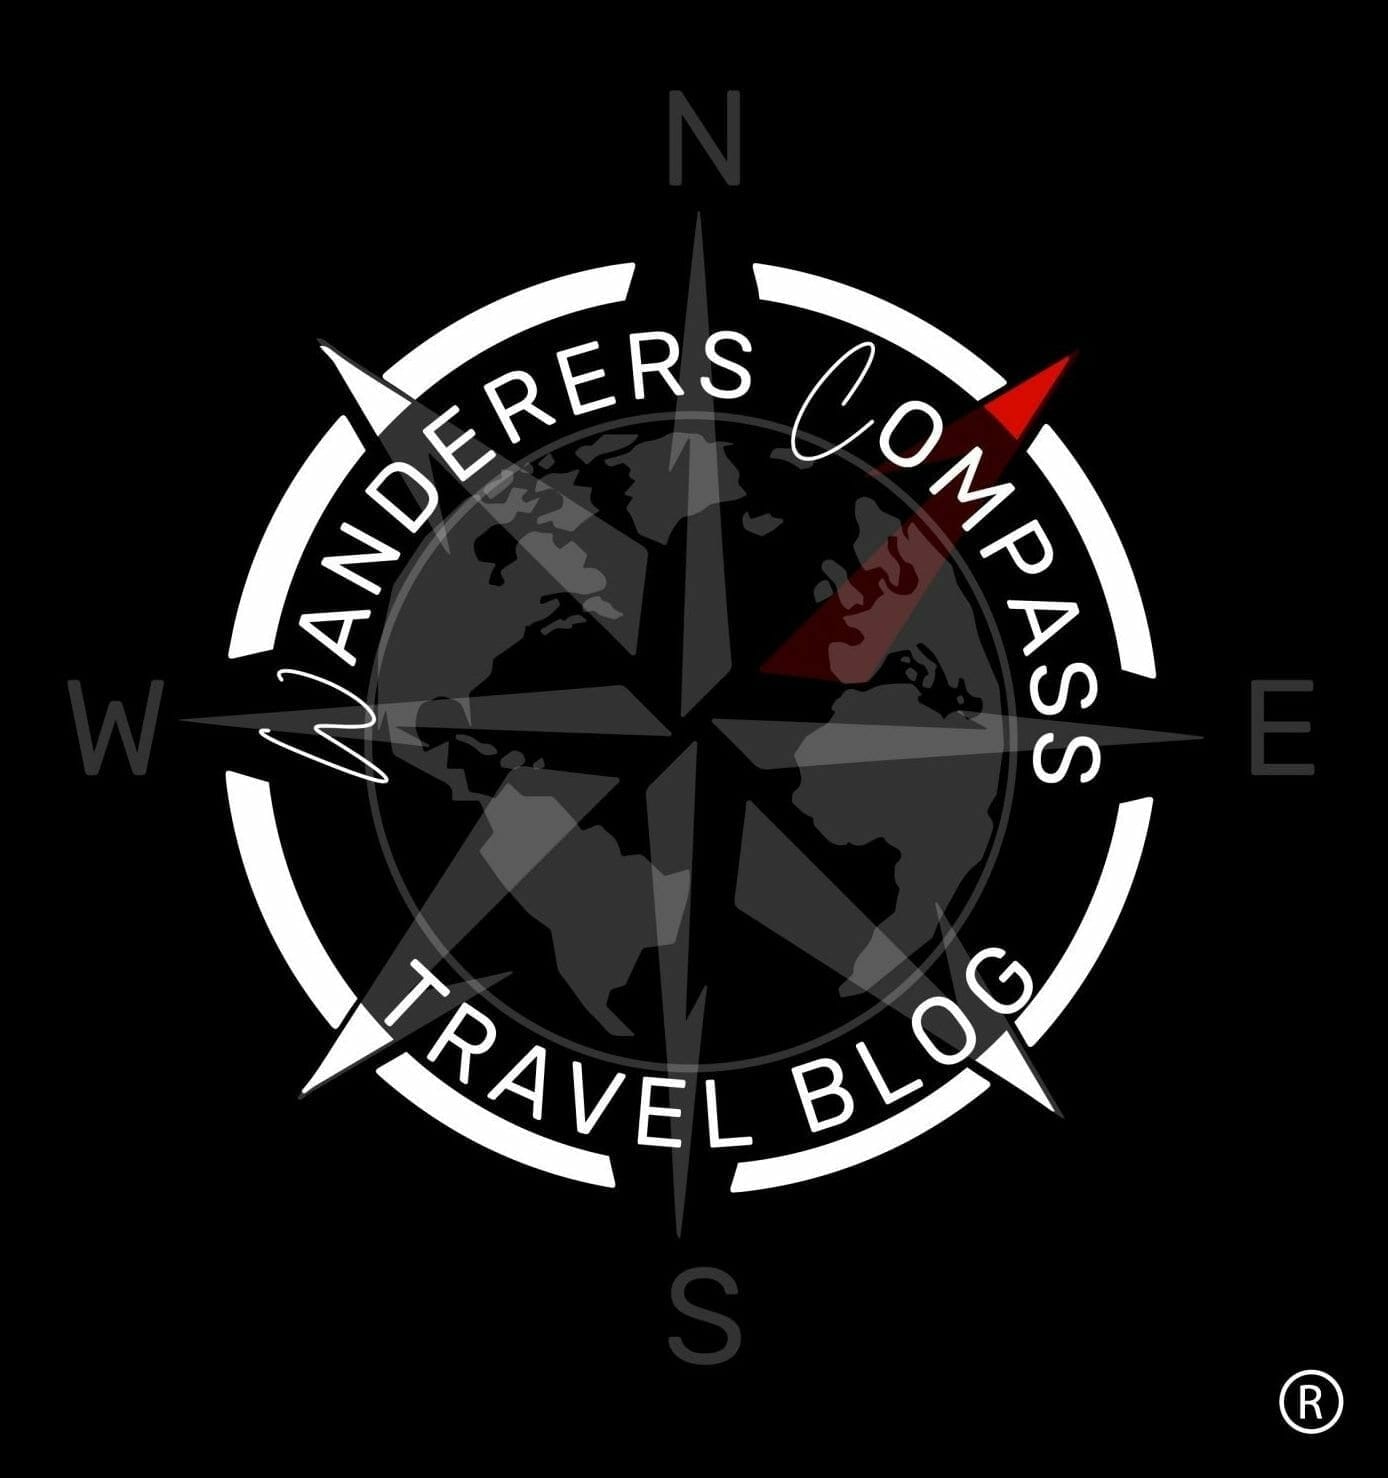 Wanderers Compass Travel Blog